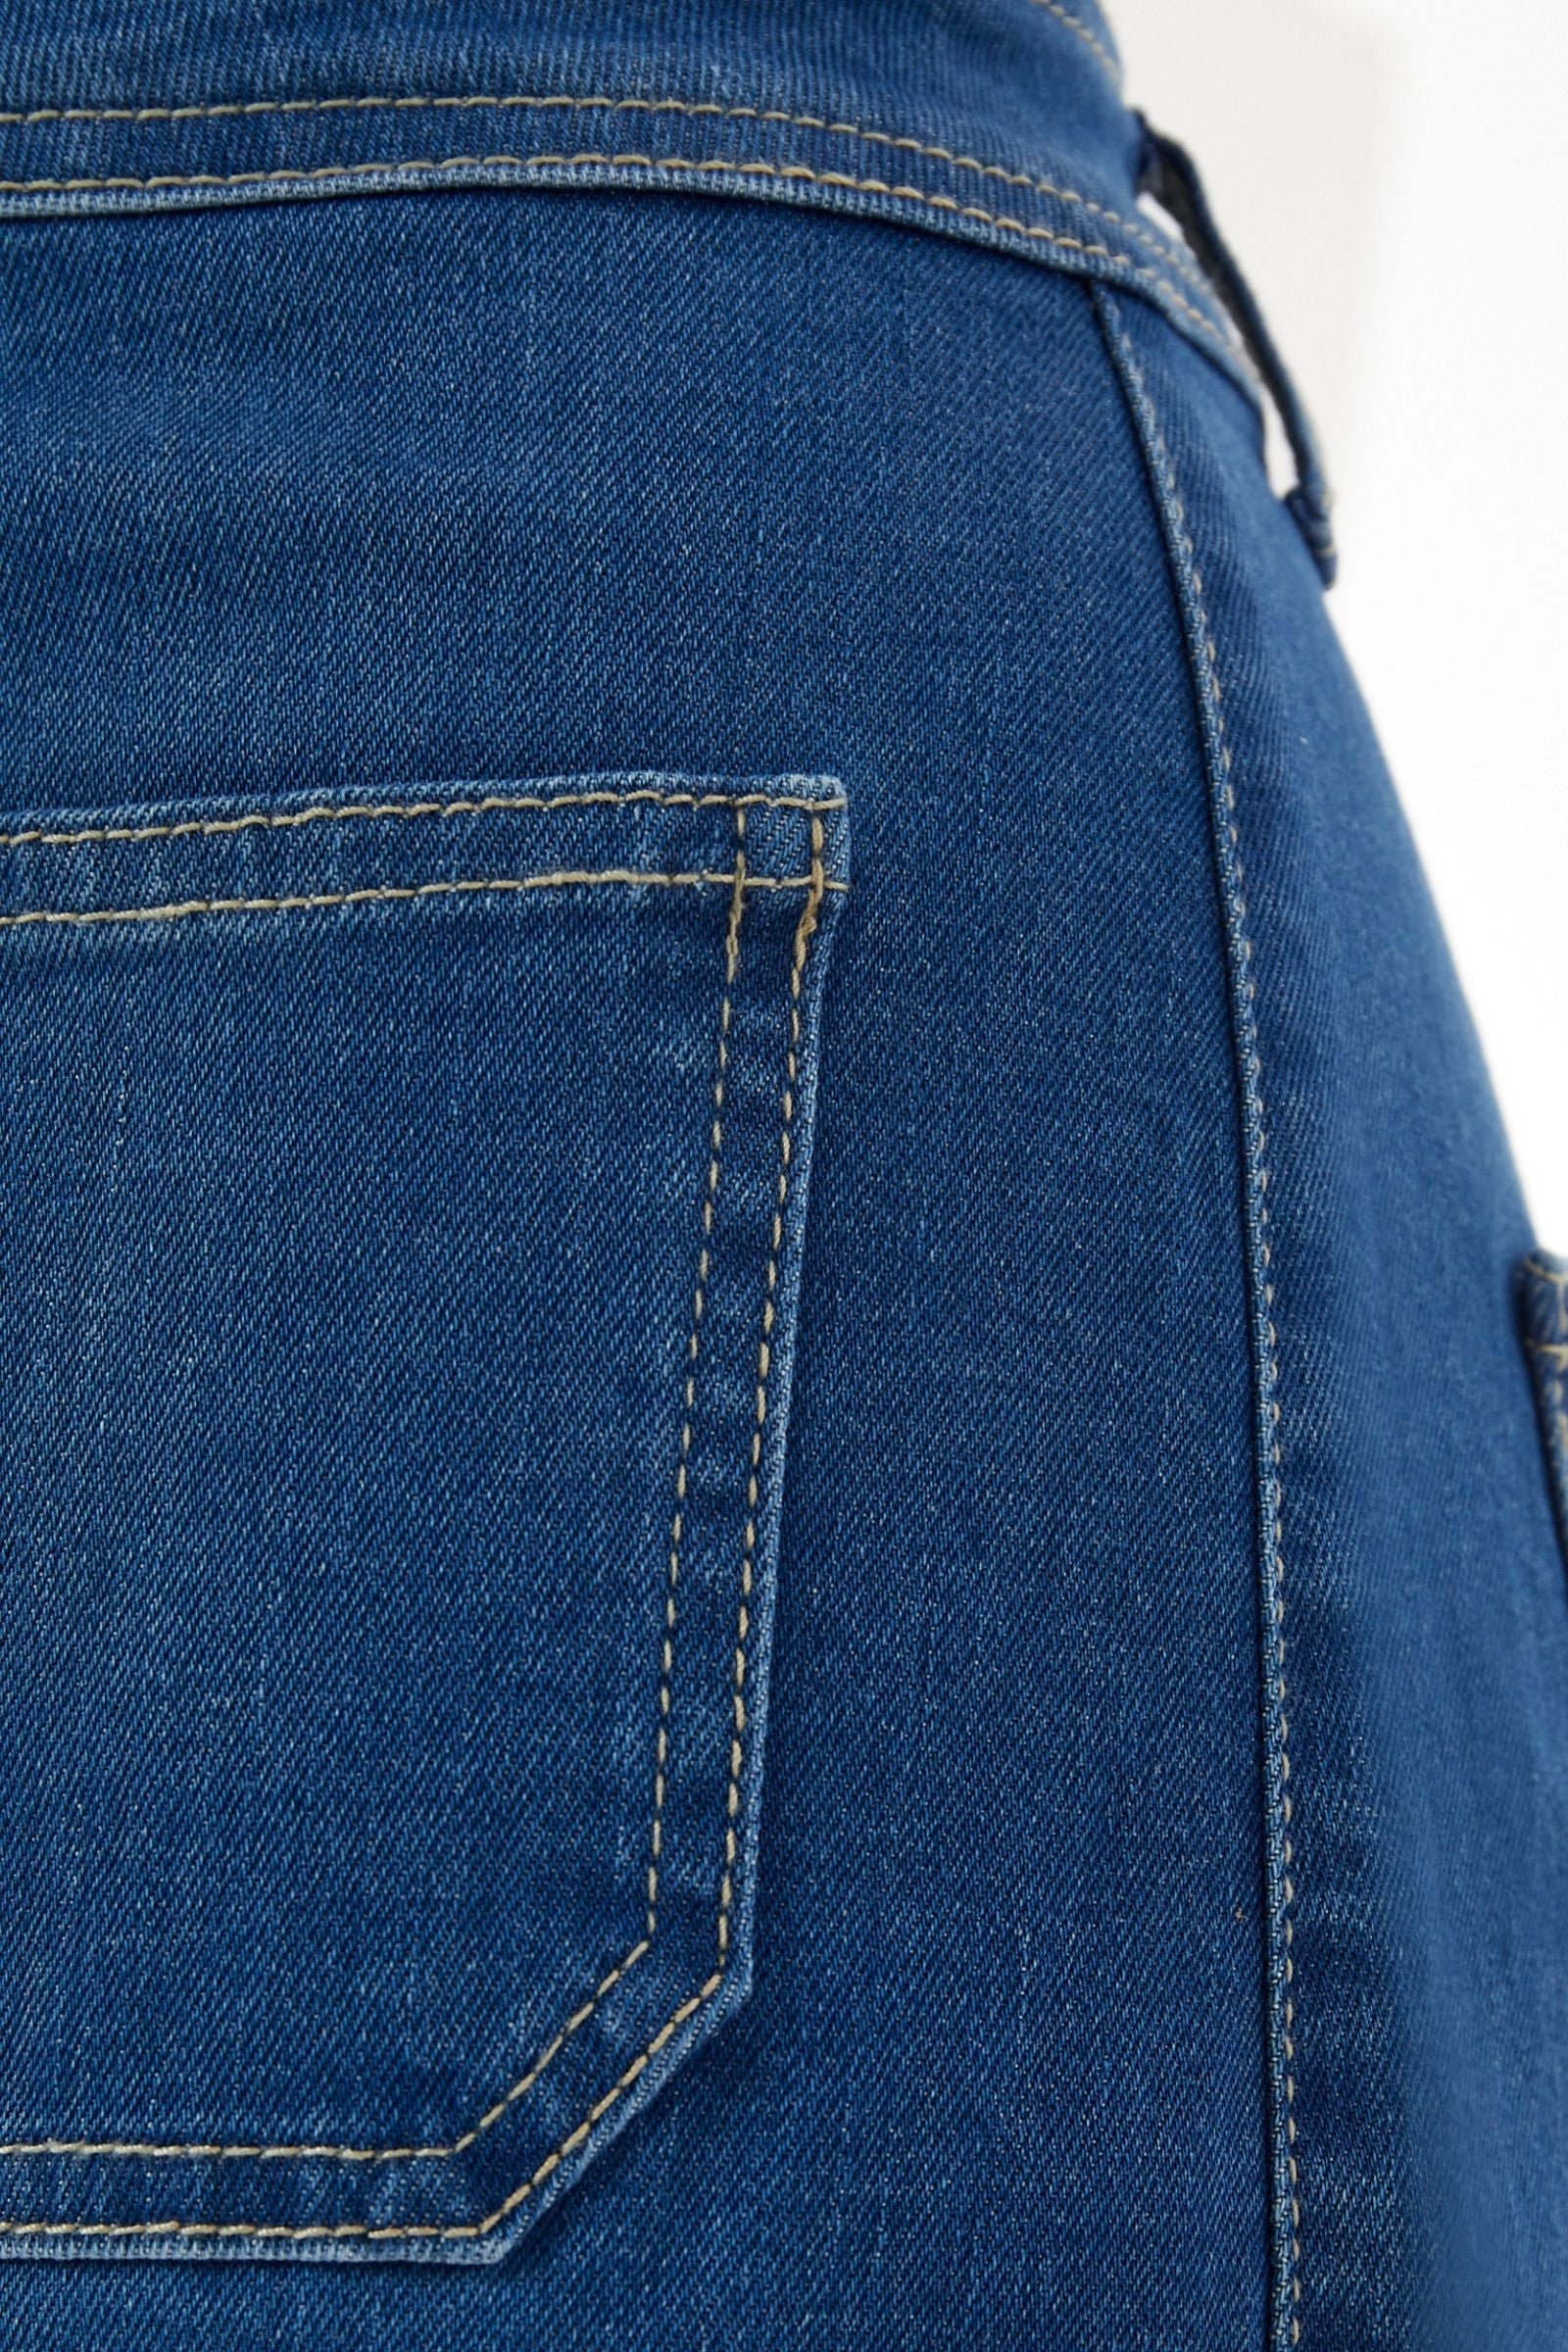 Pantalon vaquero azul bolsillos delantero campana - lolitasyl.com